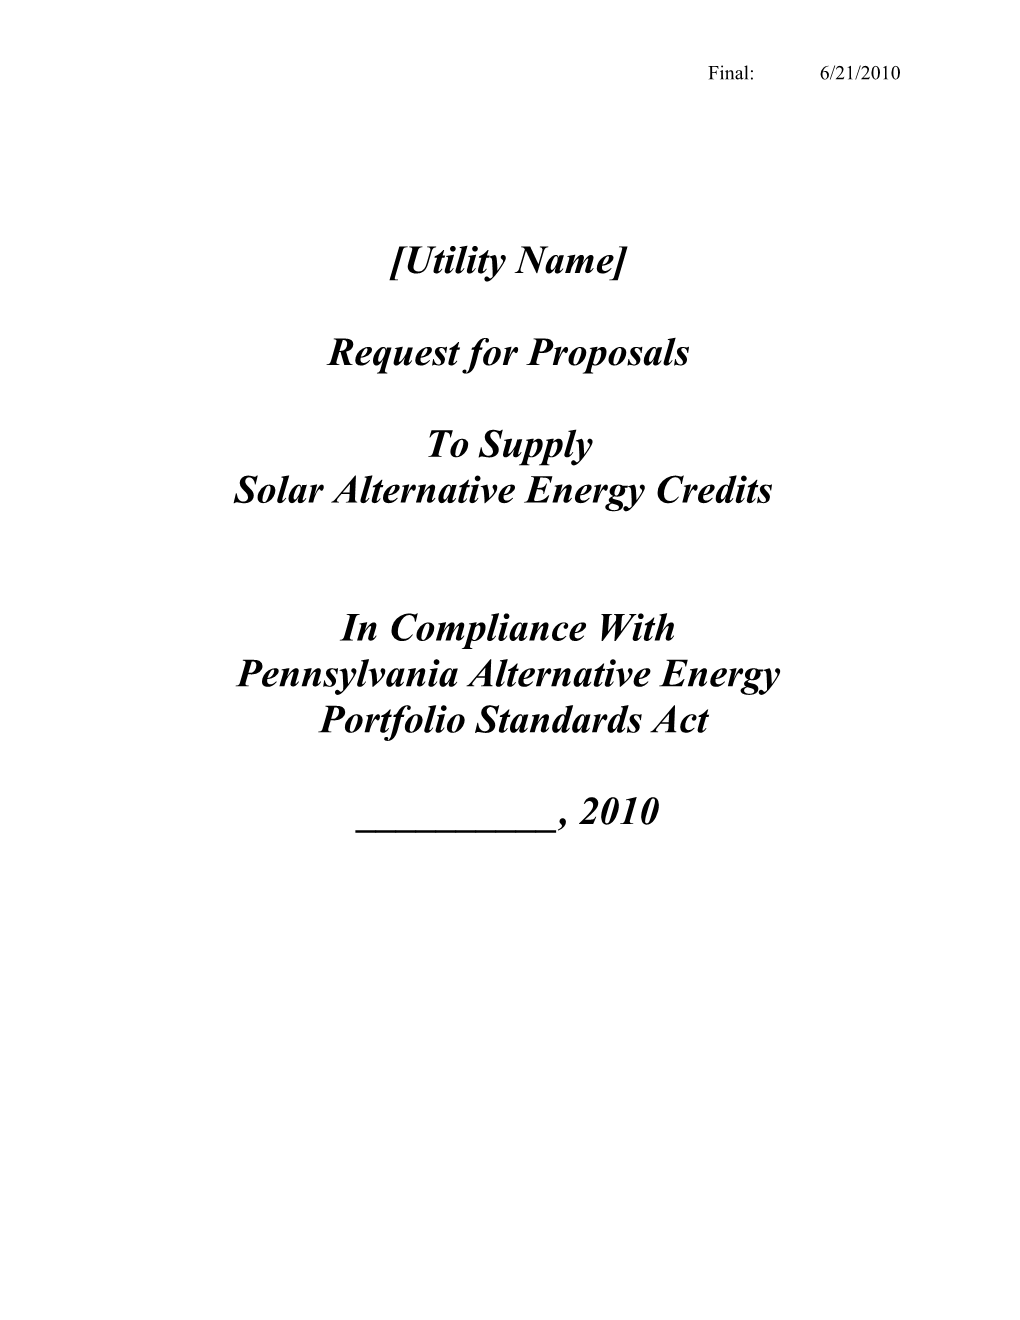 Solar Alternative Energy Credits